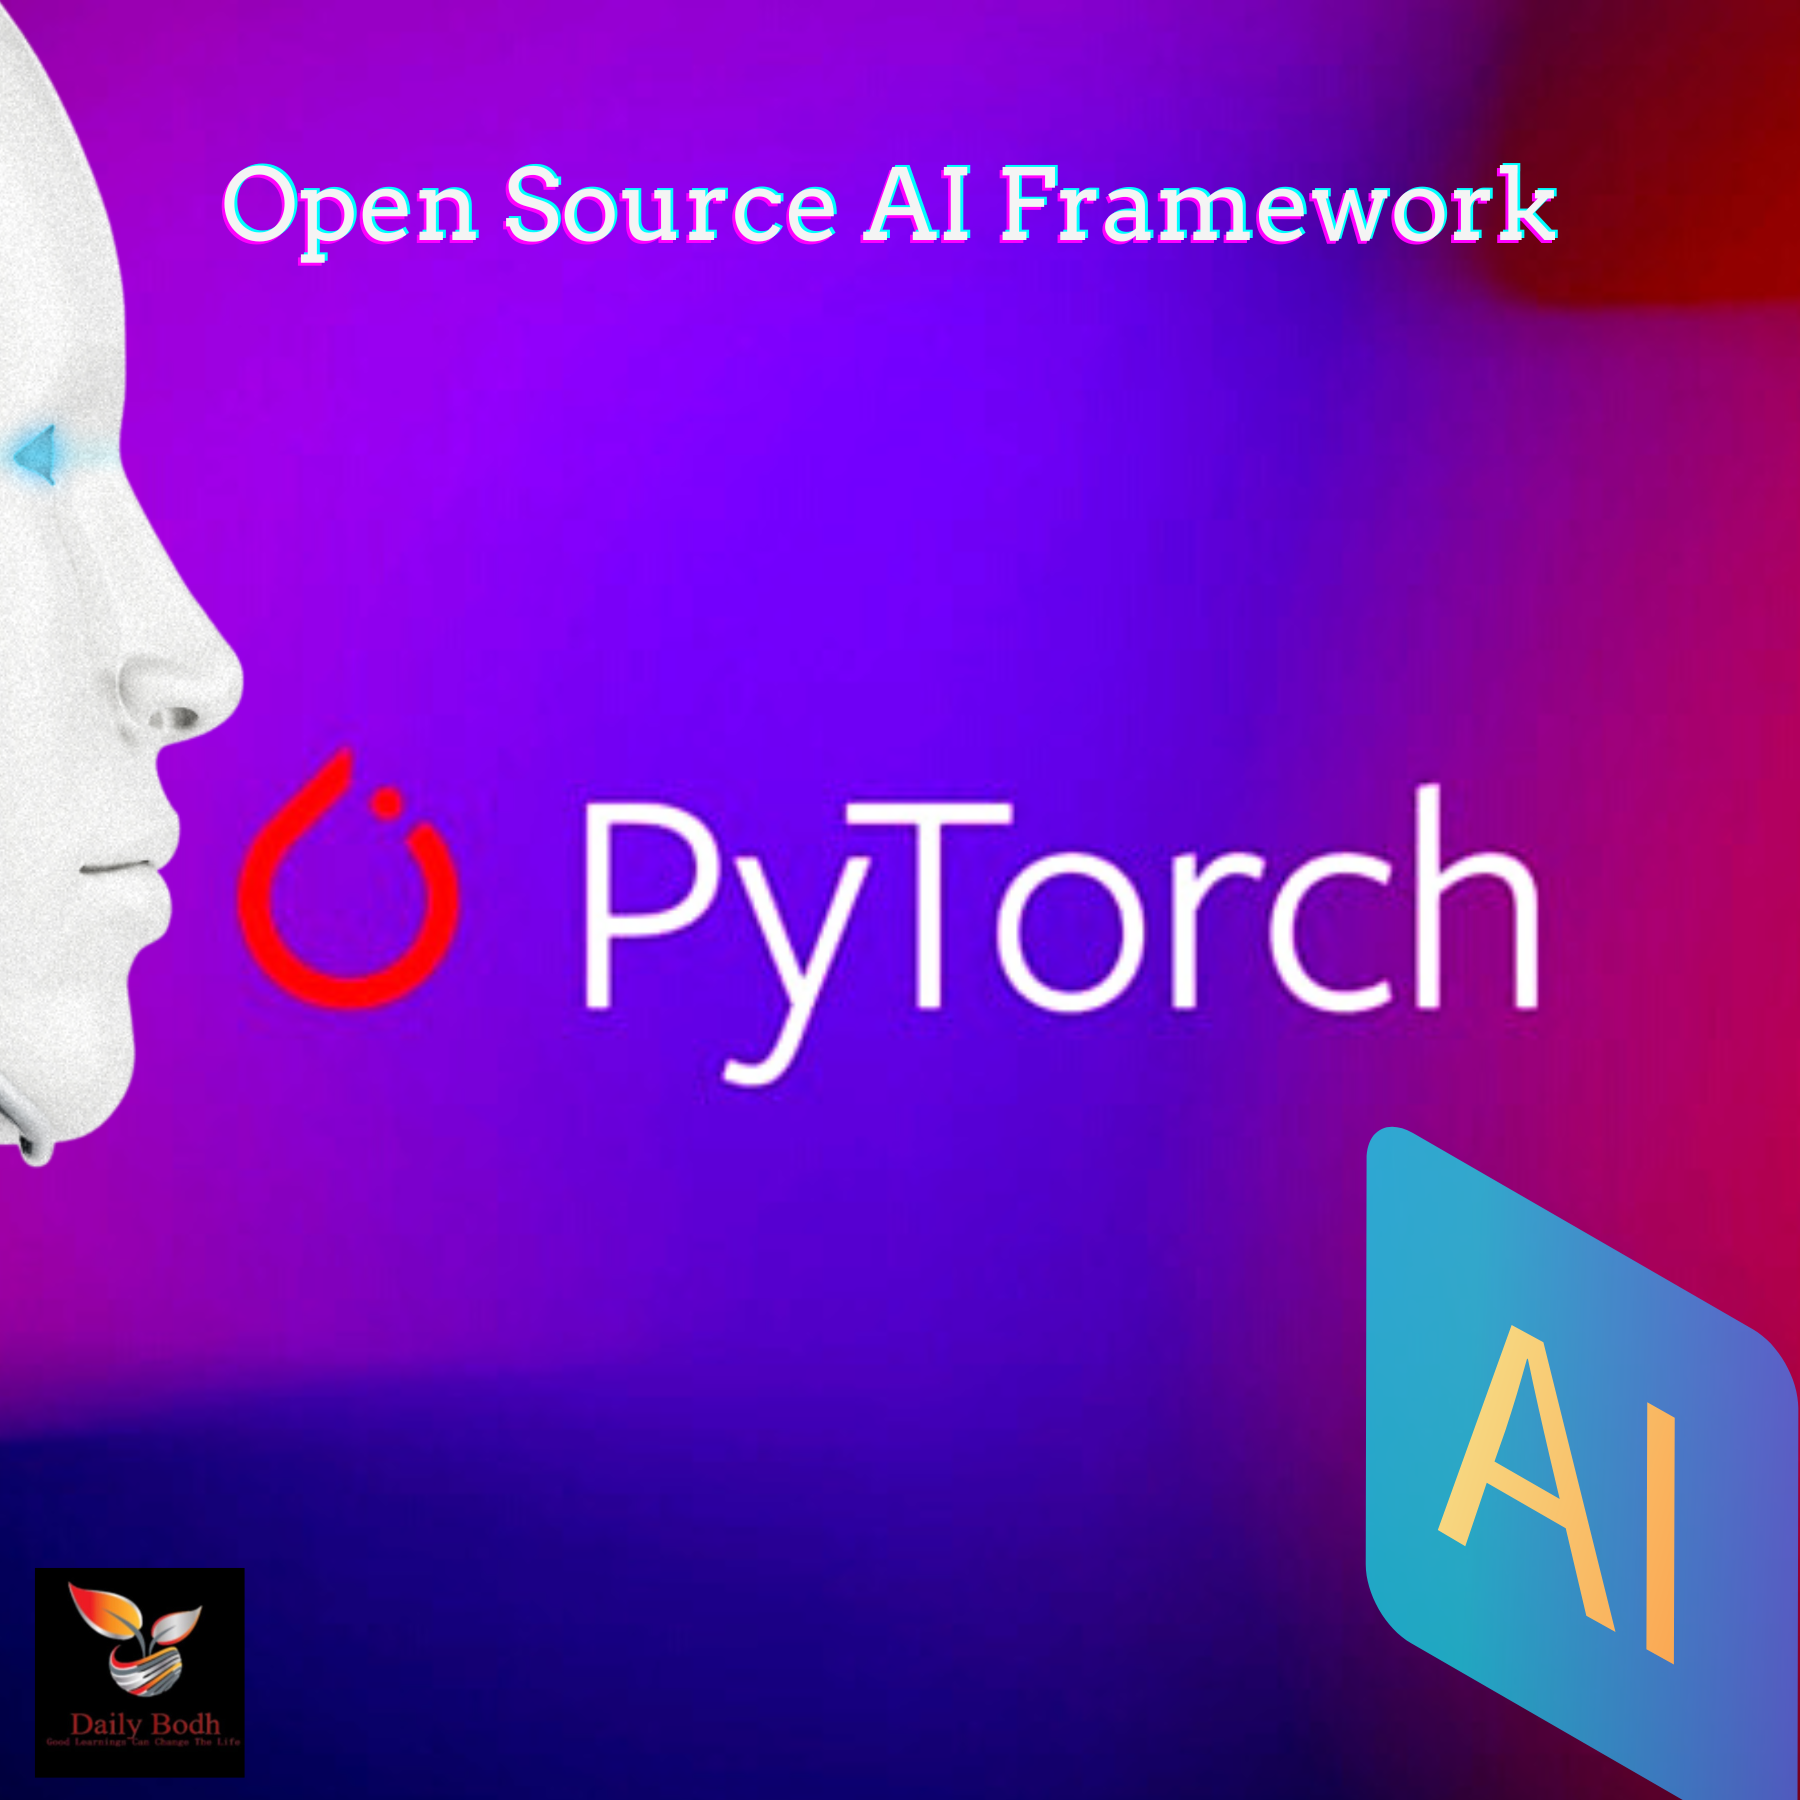 Open Source AI Framework